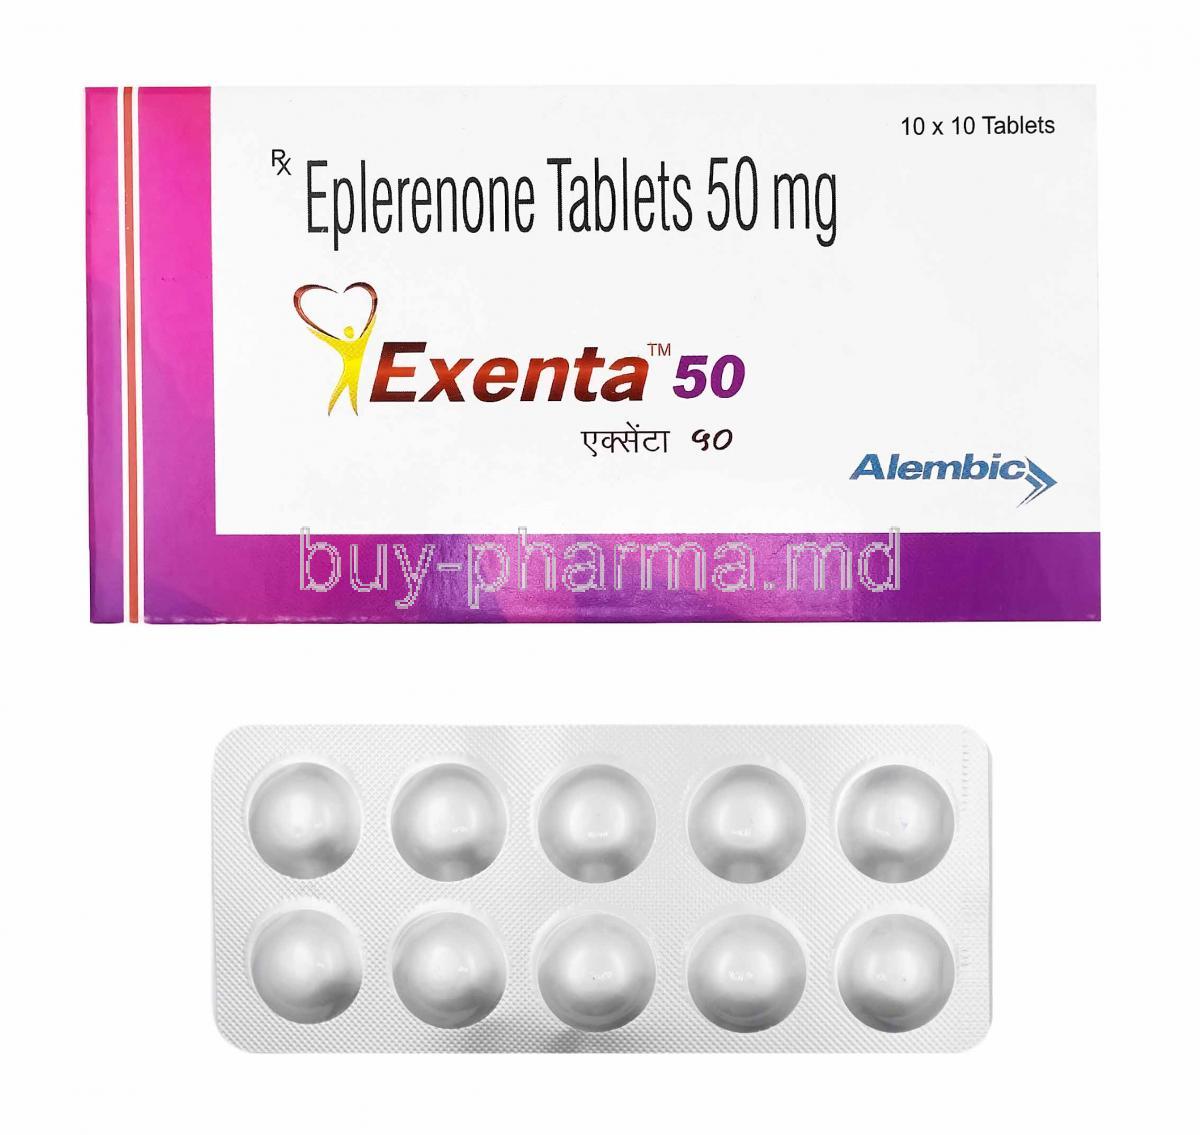 Exenta, Eplerenone 50mg box and tablets